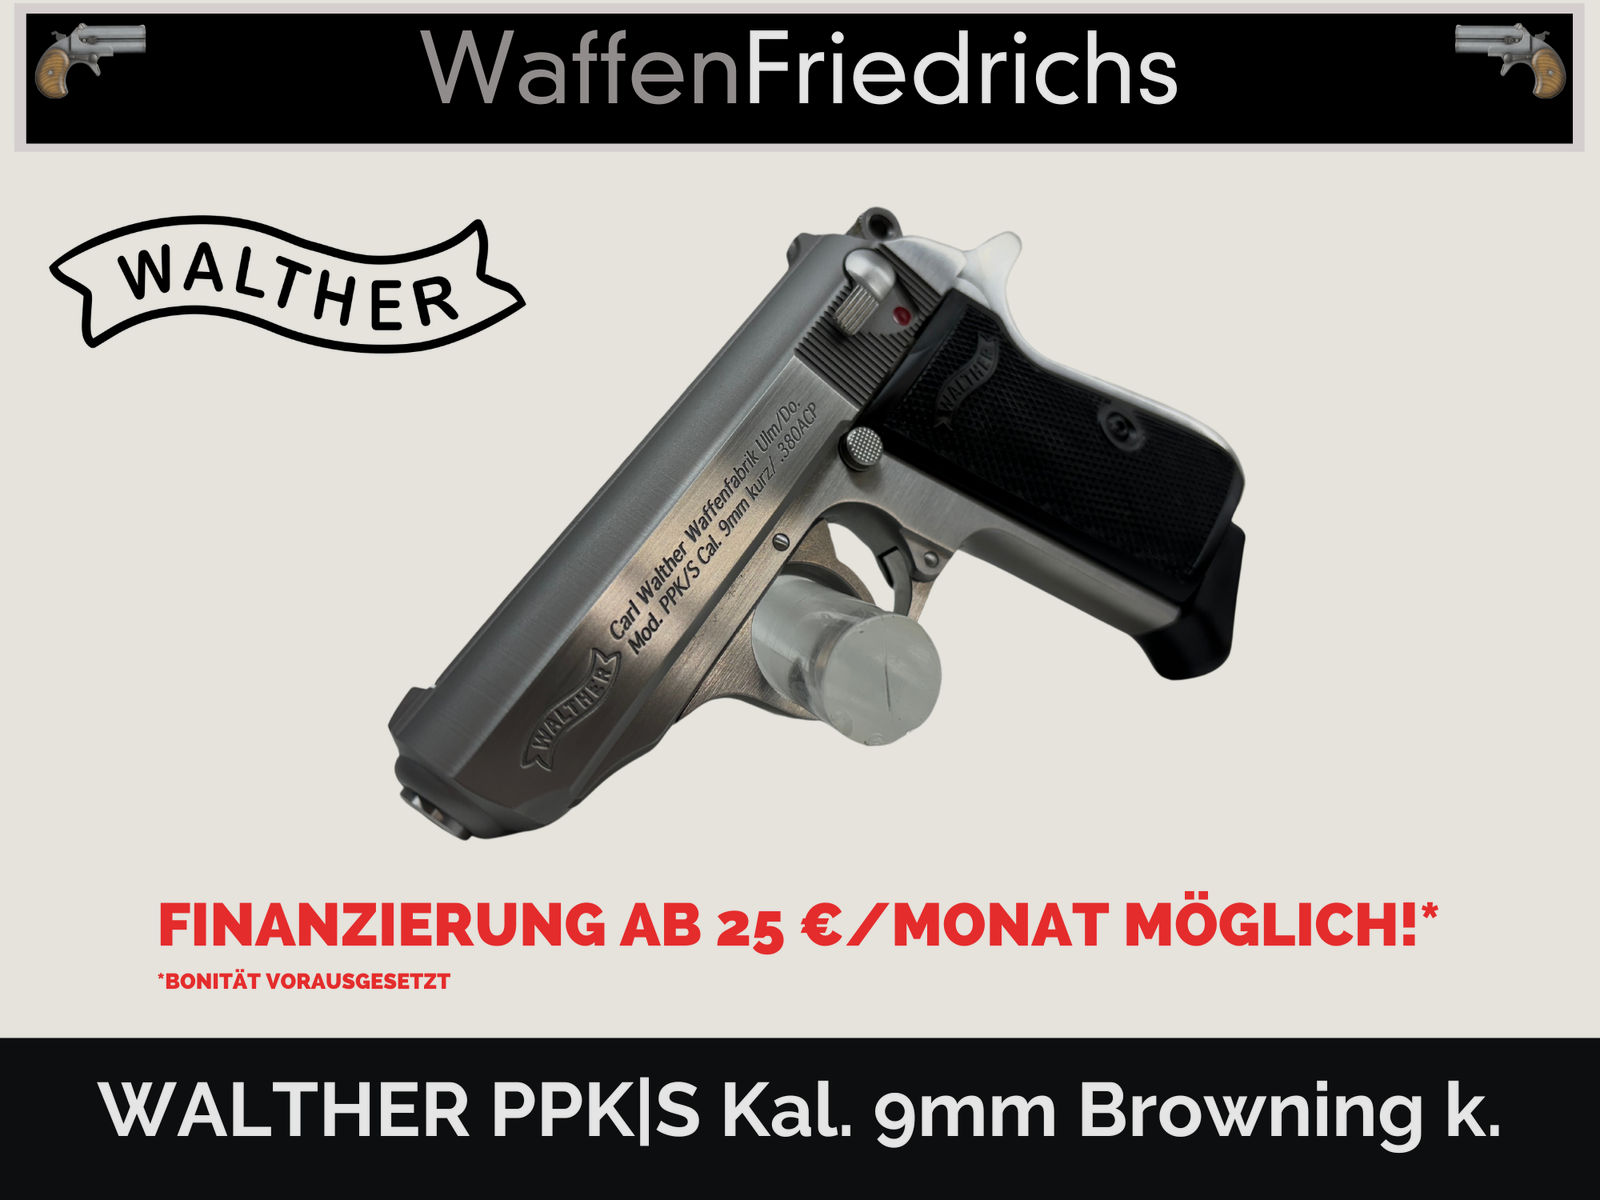 Walther PPK S Stainless - WaffenFriedrichs